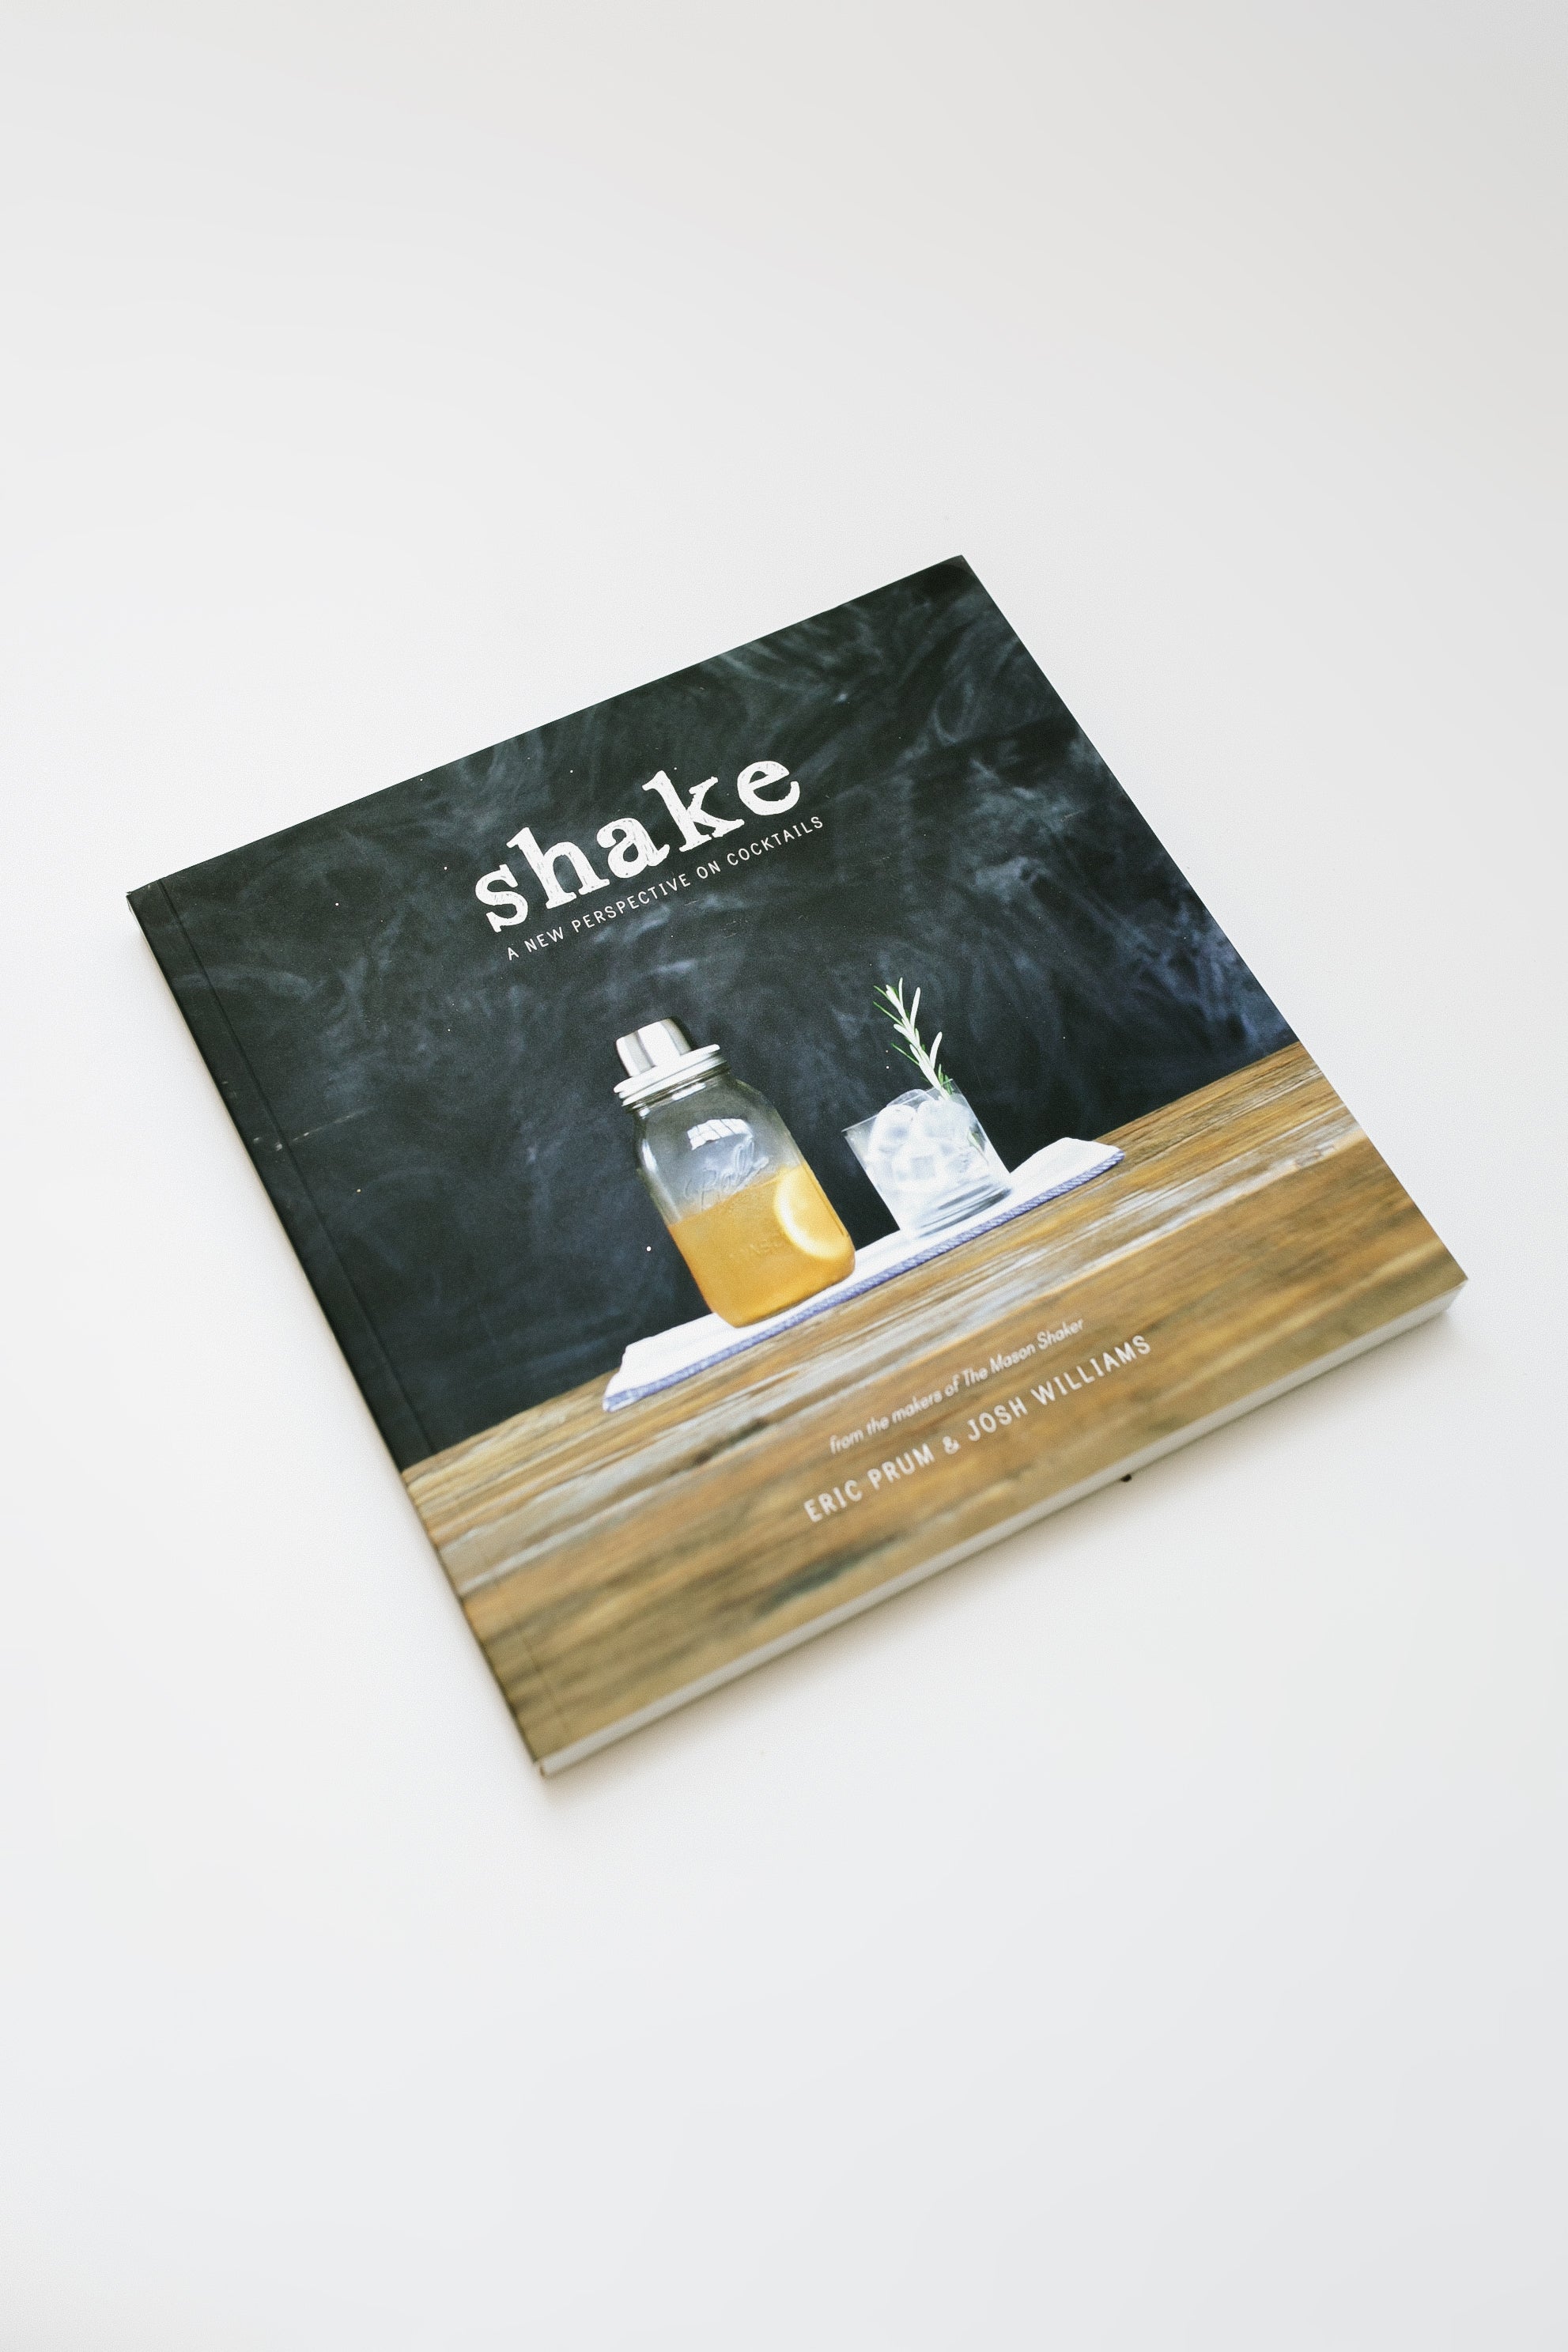 Shake Book